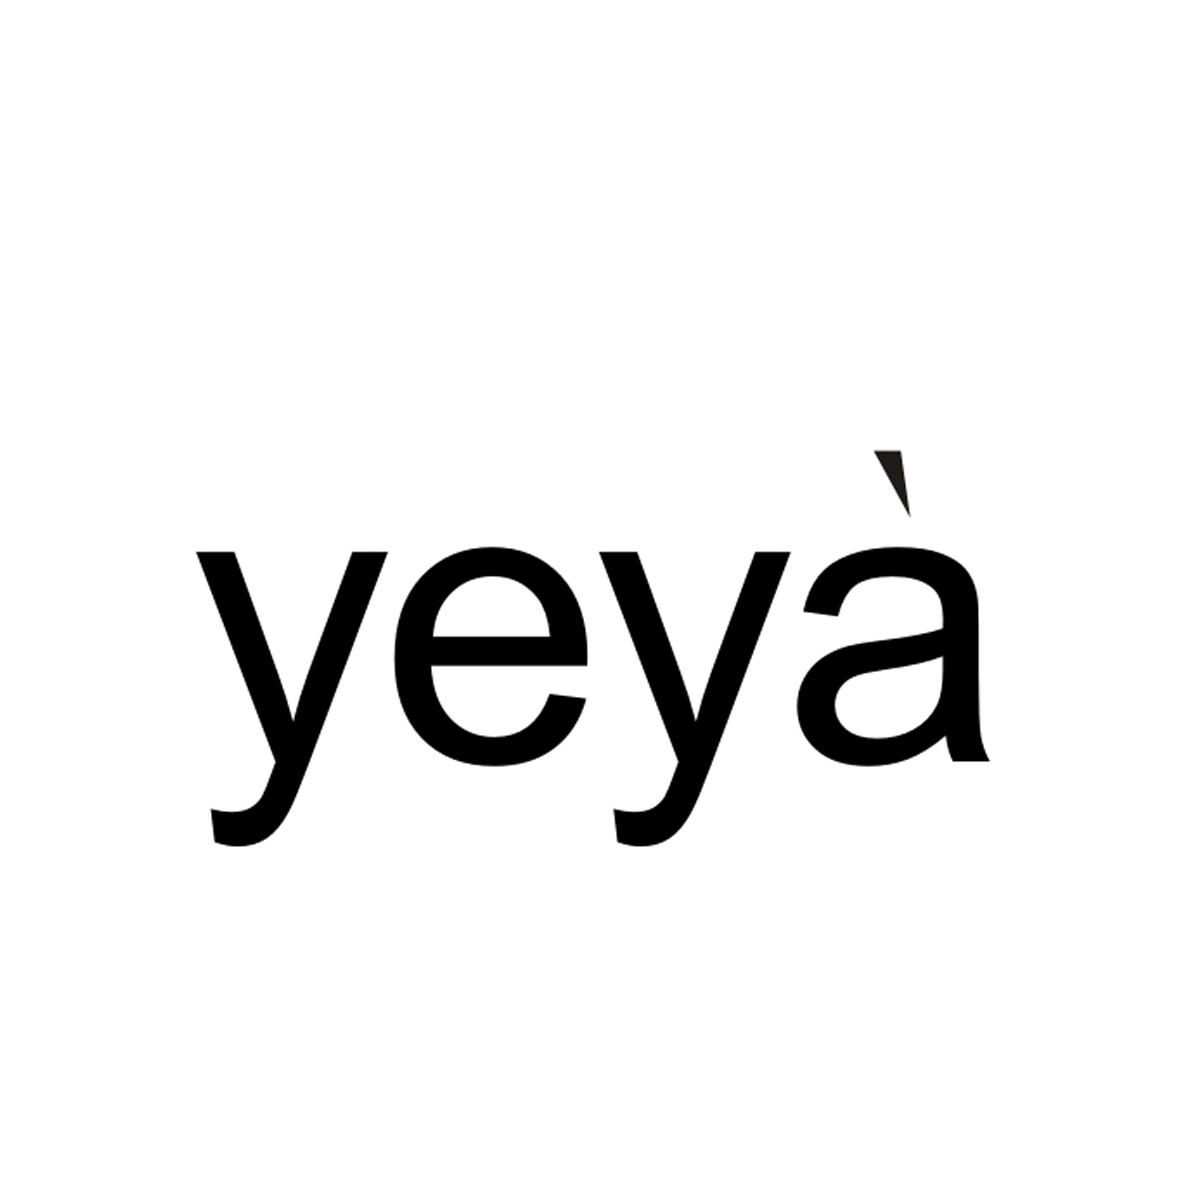 YEYA